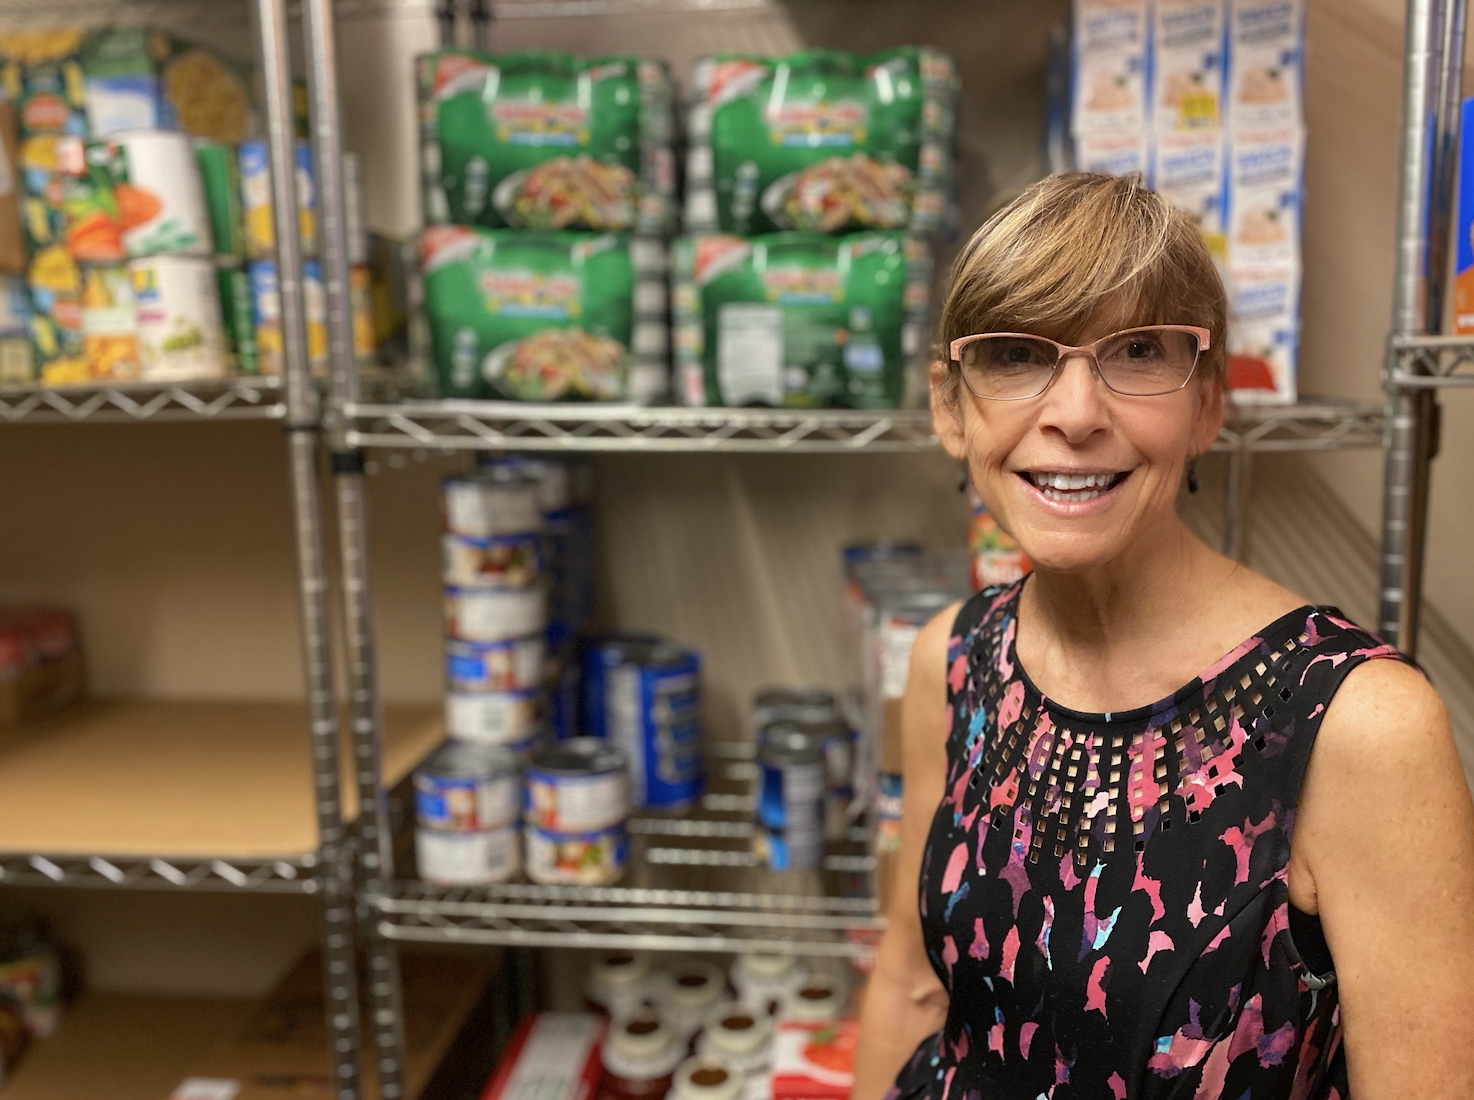 Volunteer coordinator Lisa Blumstein manages the Just 3 Things Pantry